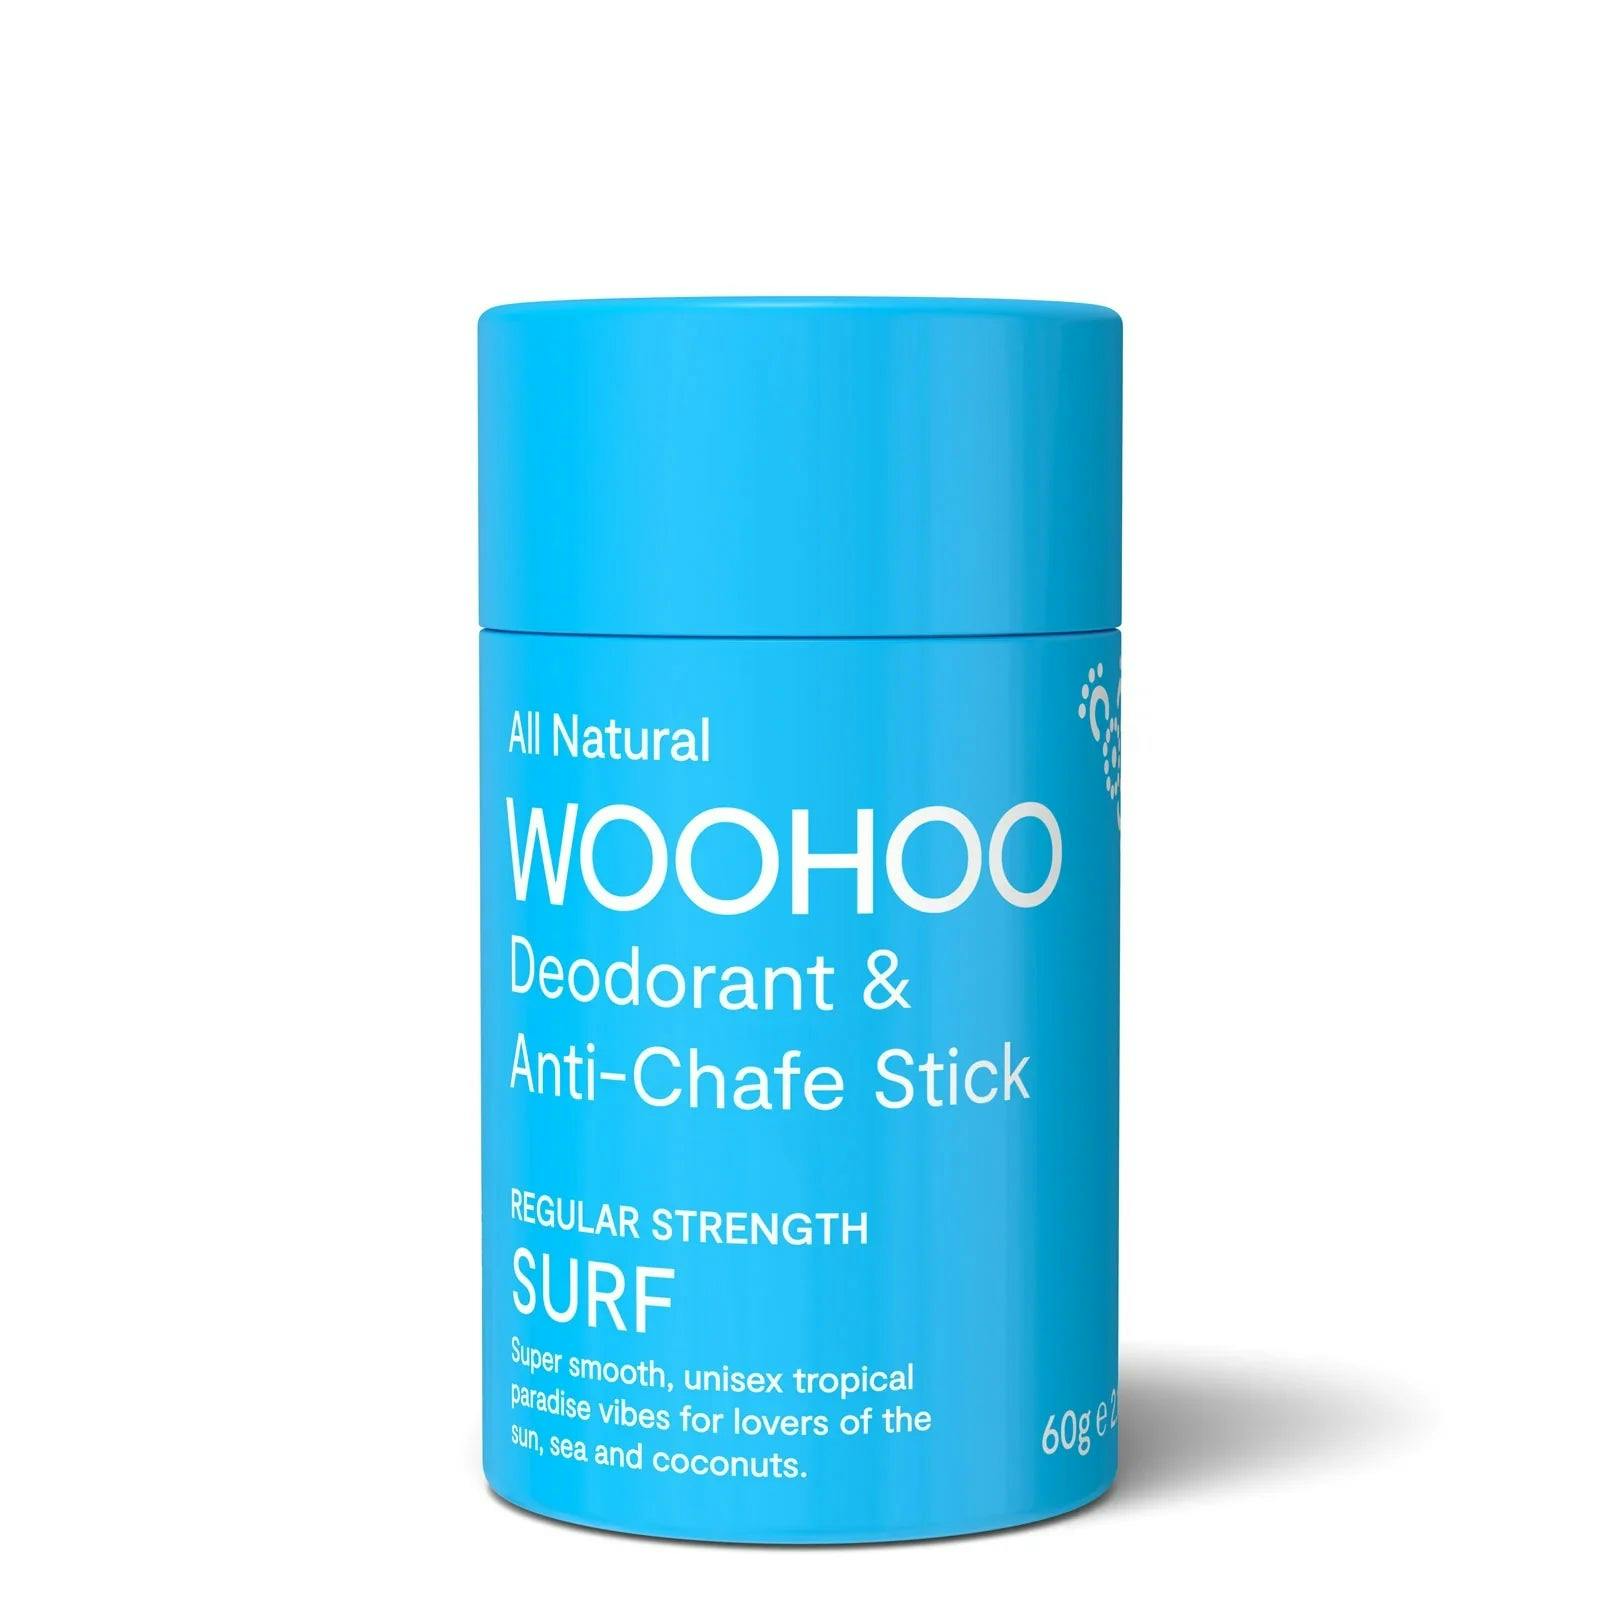 WOOHOO Deodorant & Anti-Chafe Stick Surf 60g